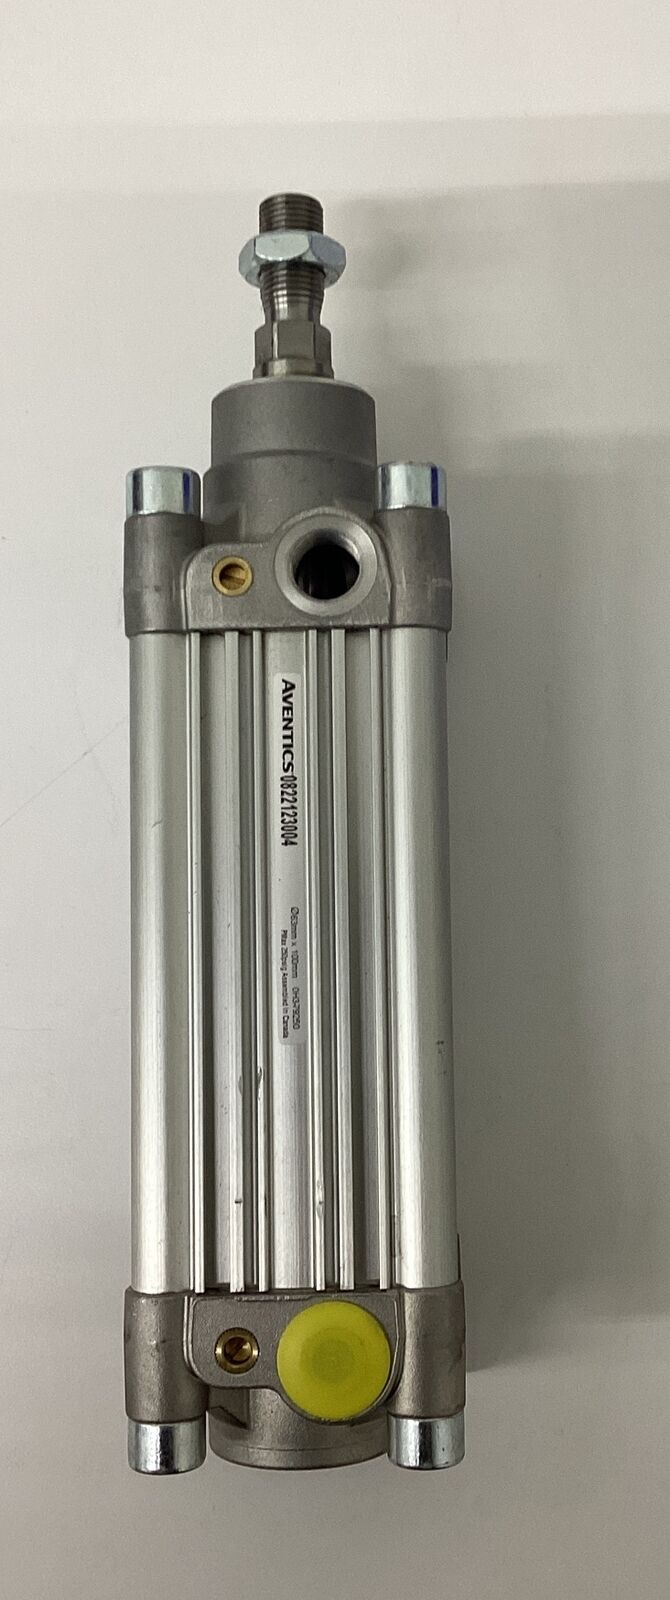 Parker Aventics  0822123004 Pneumatic Cylinder 63mm x 100mm (CL360)